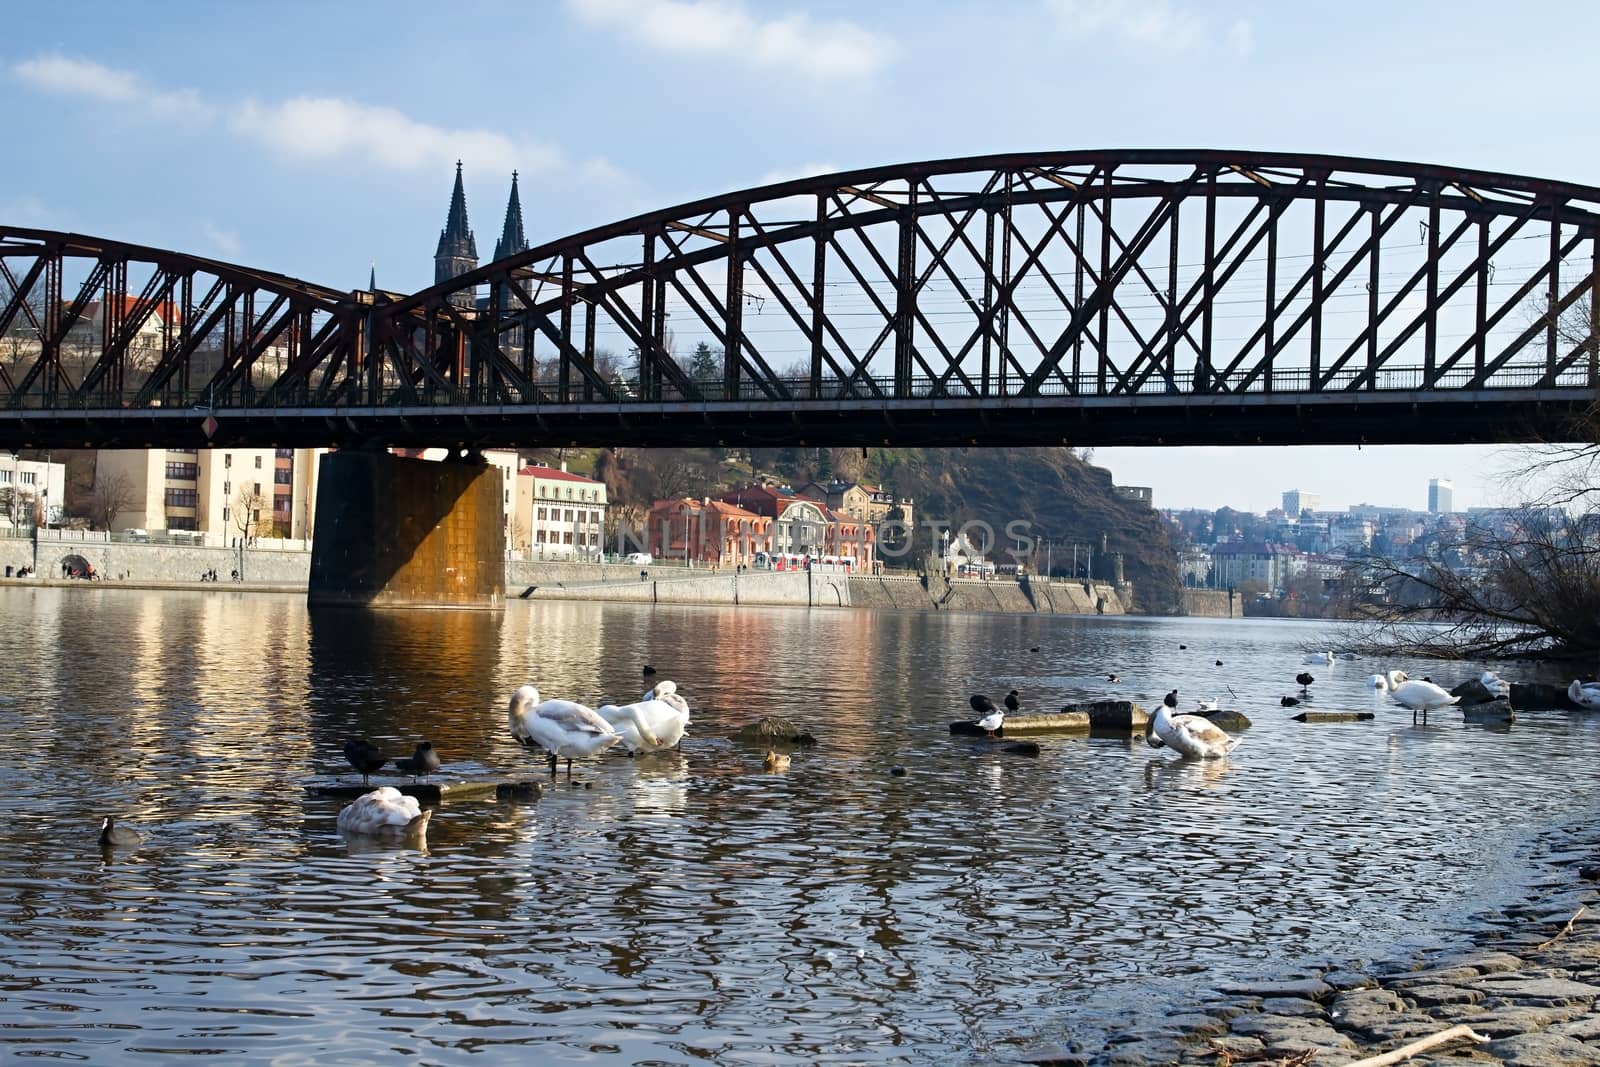 Prague and its old houses, Vltava river and bridges by Dermot68